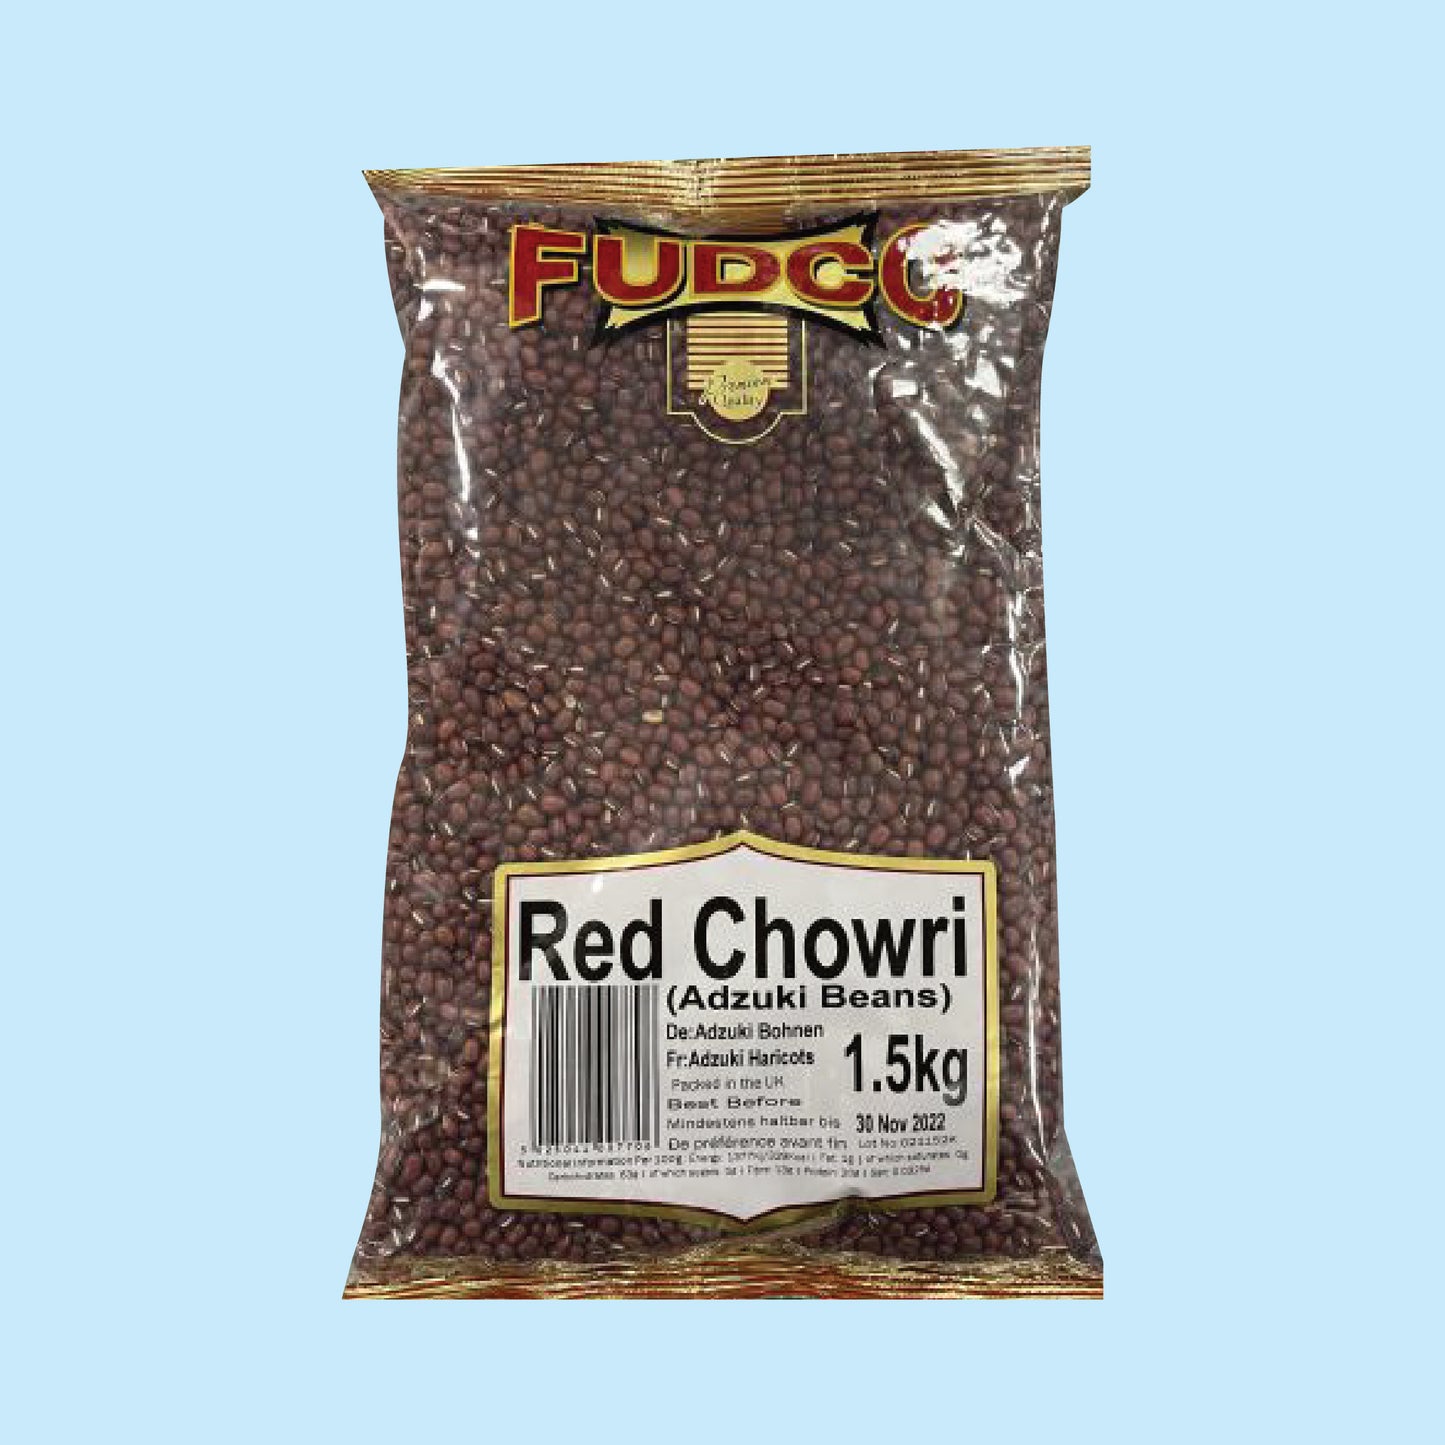 Fudco Red Chowri 1.5kg